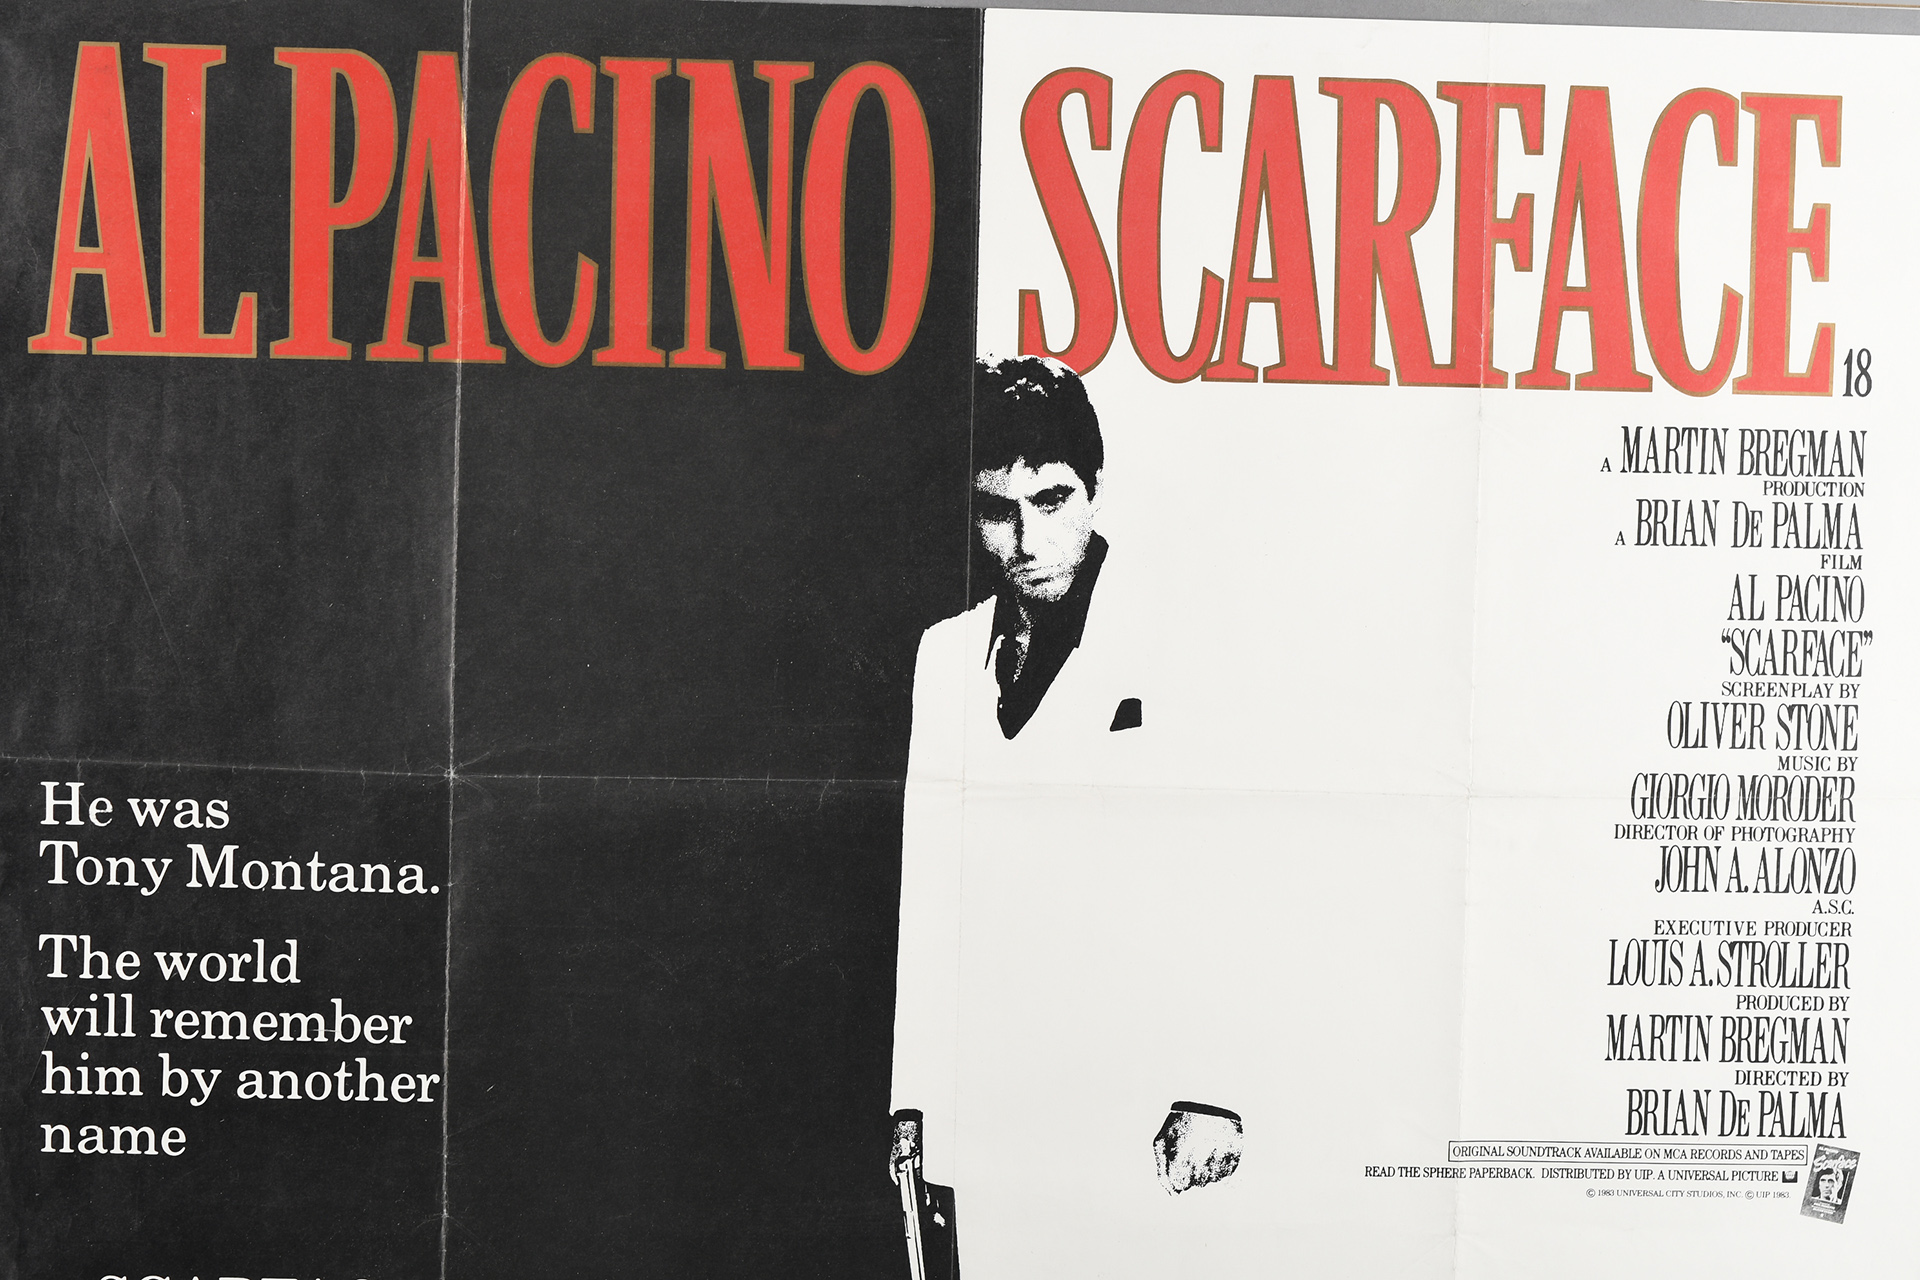 Original "Scarface" Cinema Poster